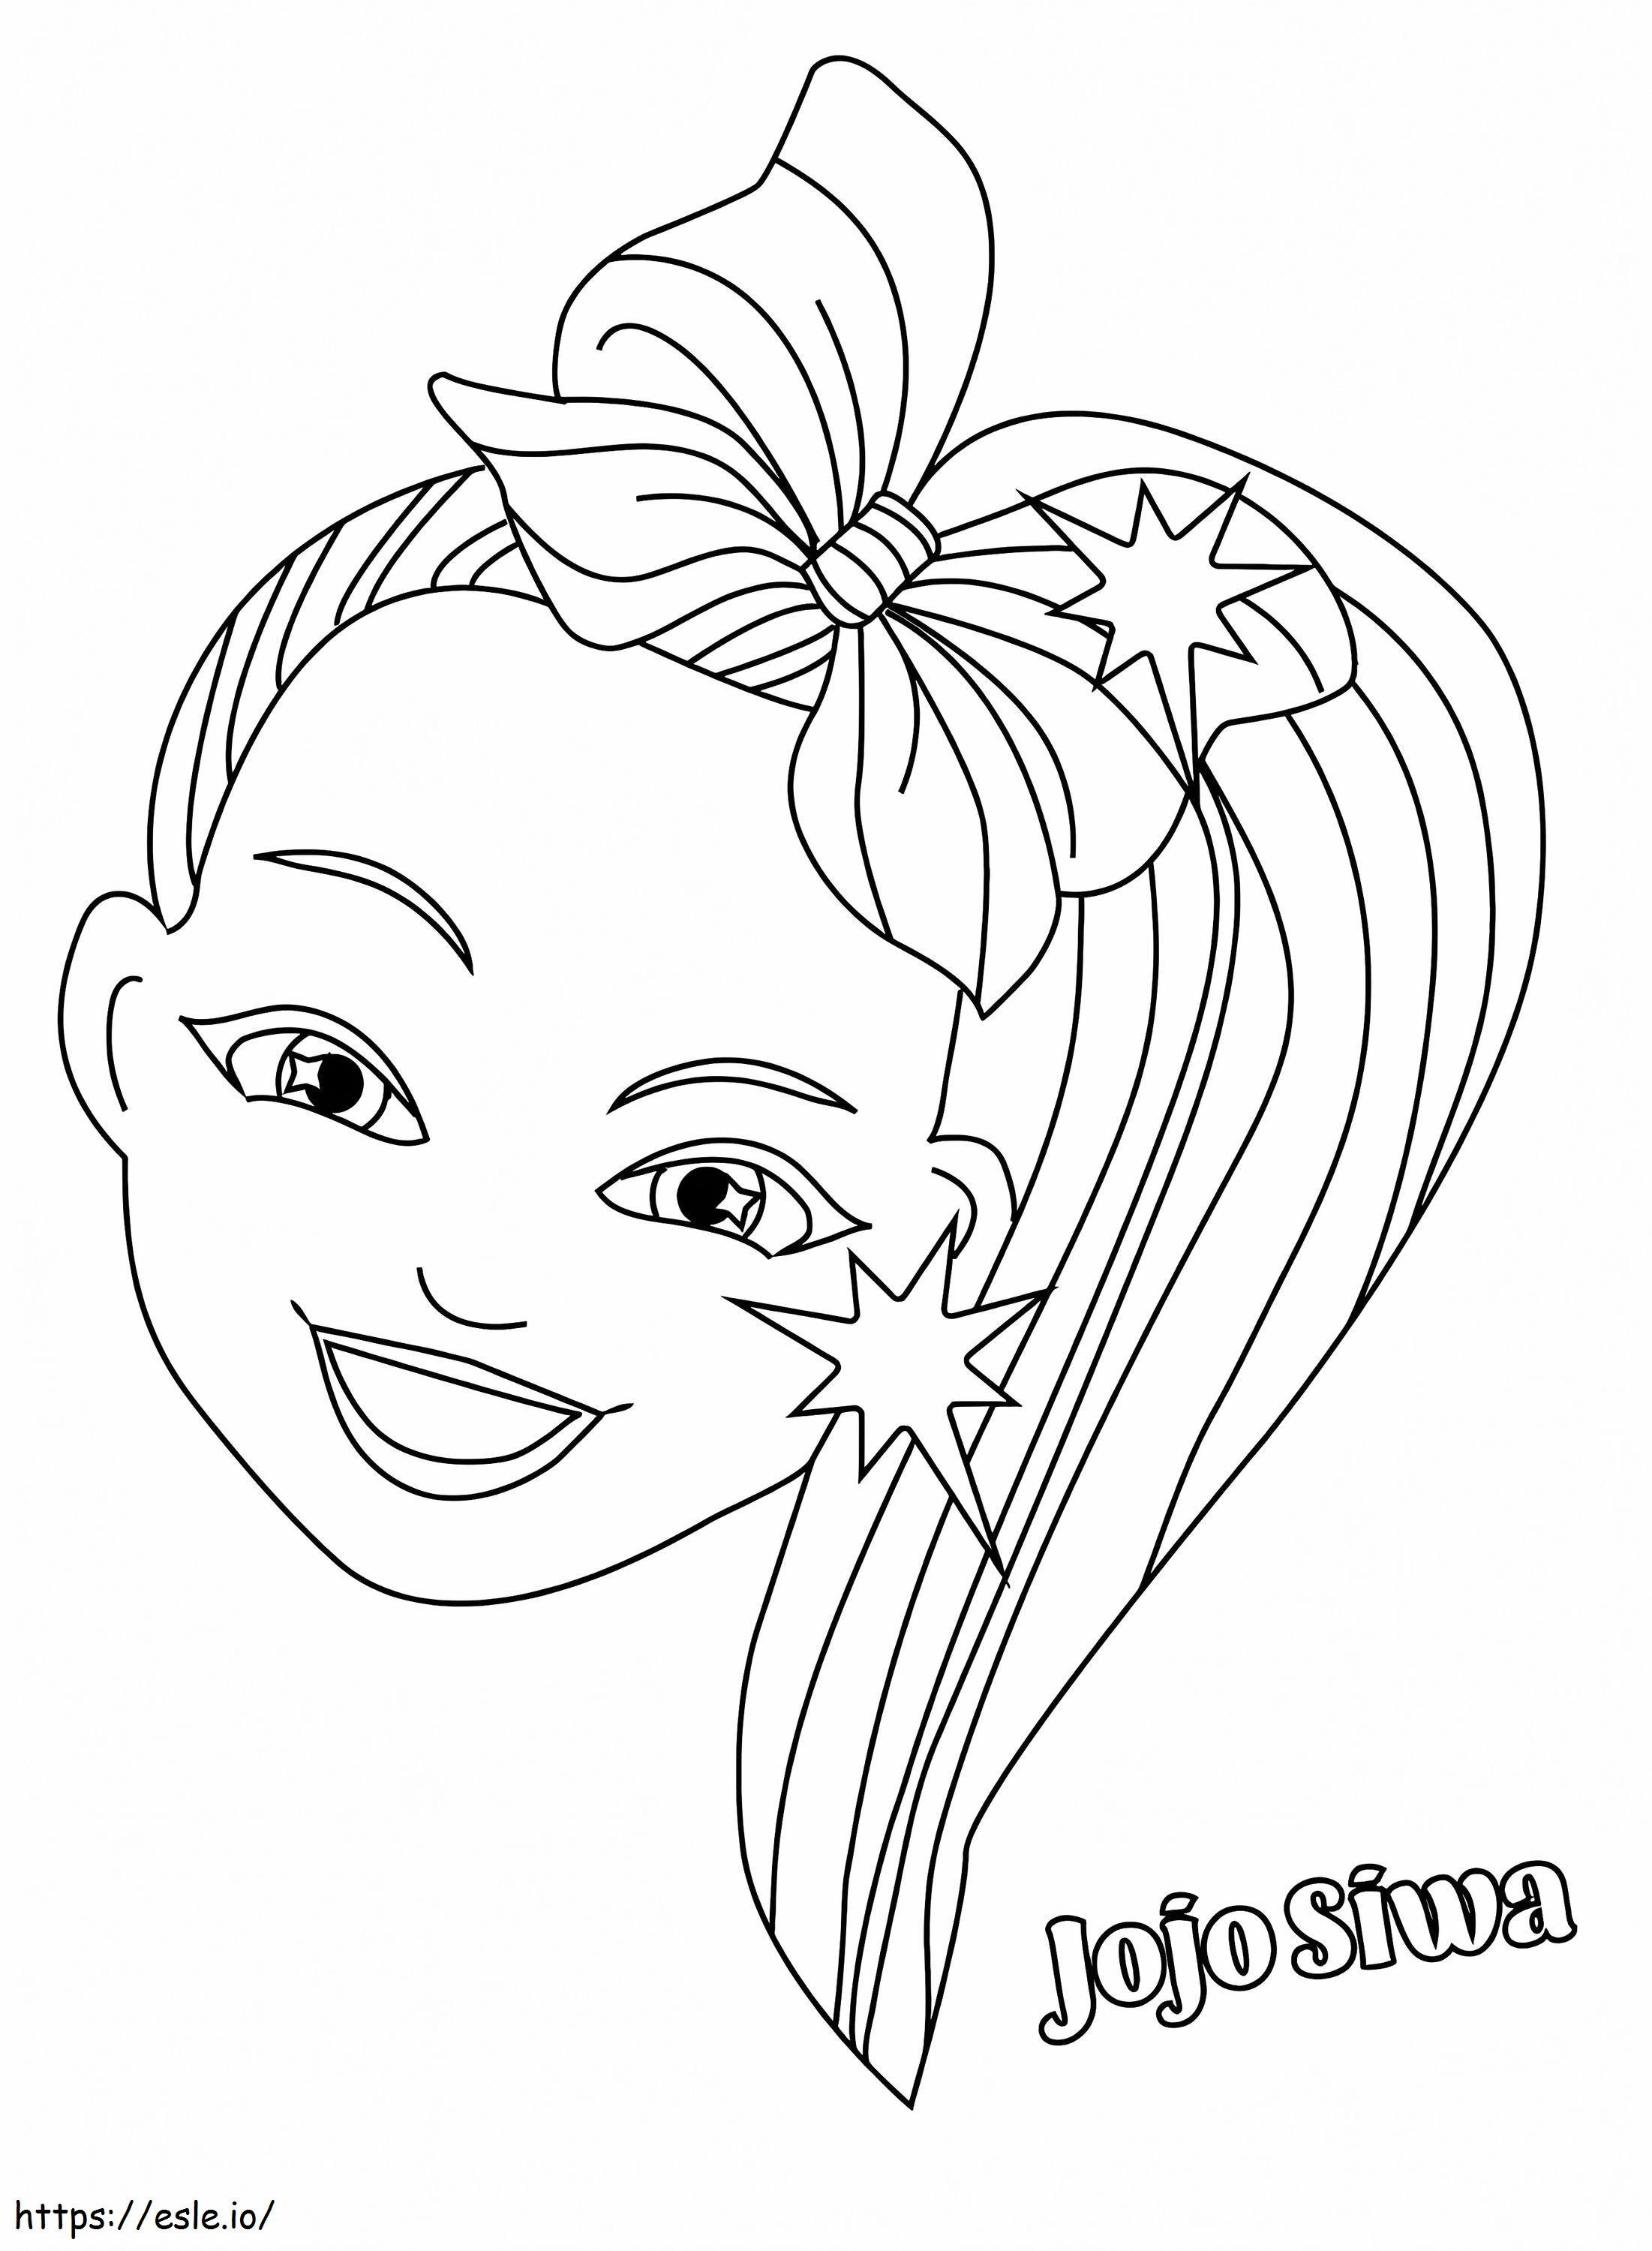 Happy Jojo Siwa coloring page